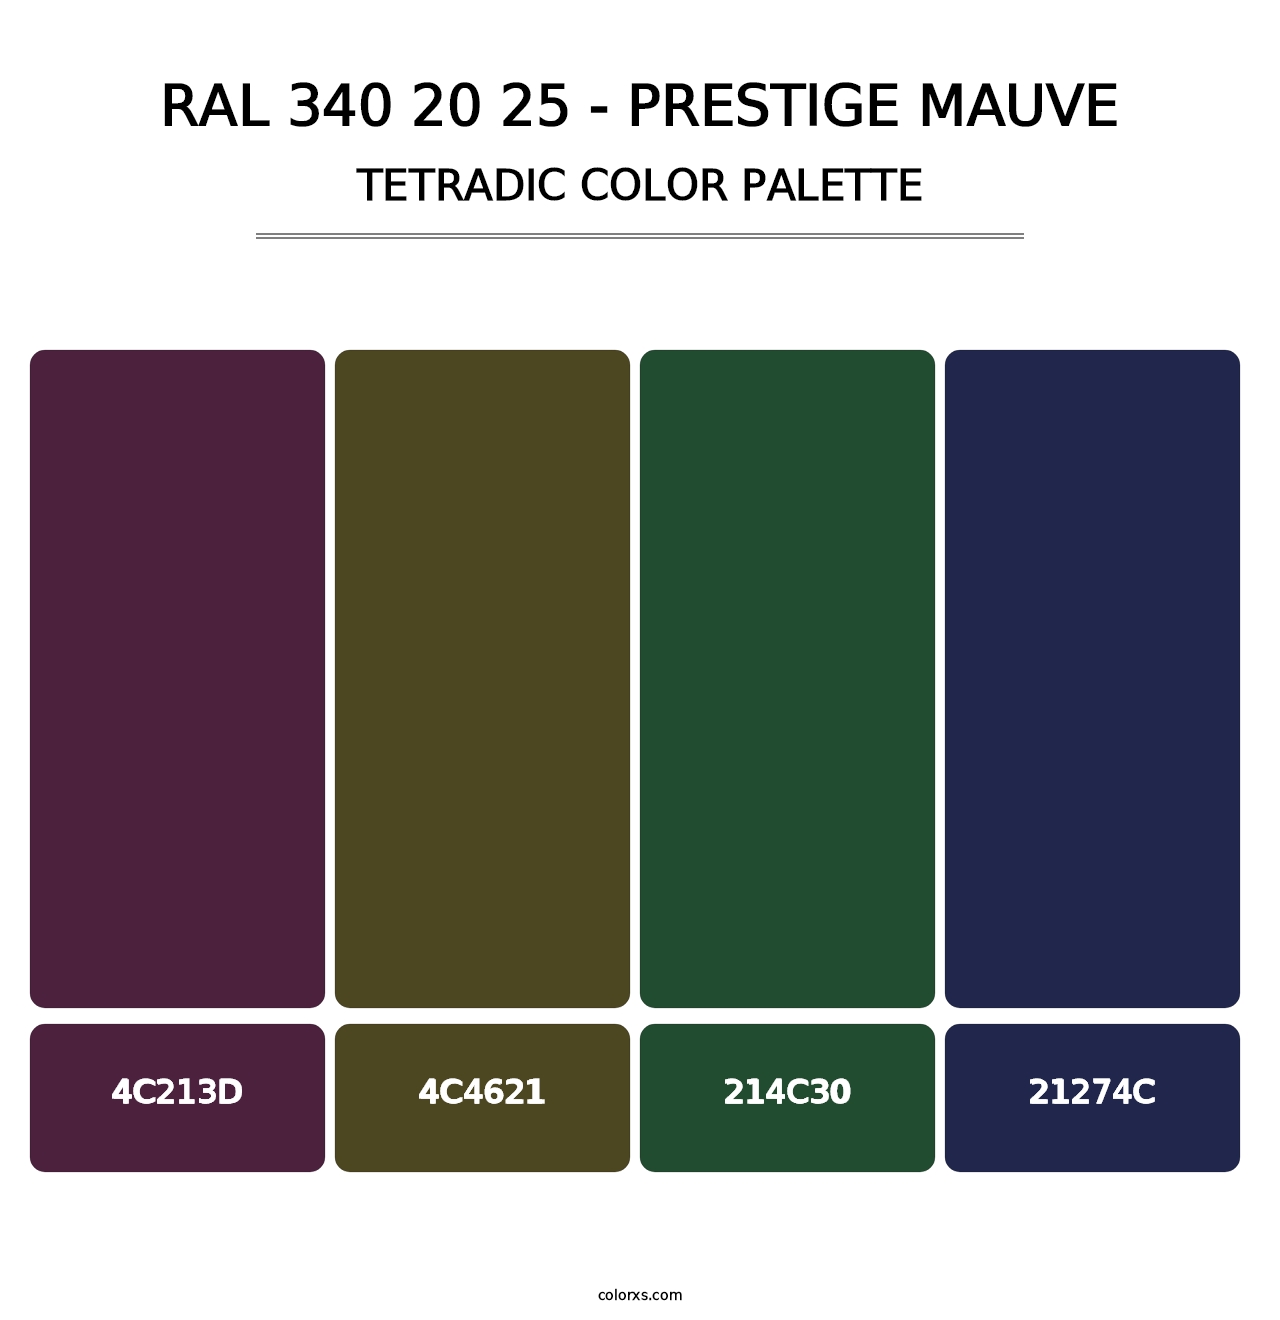 RAL 340 20 25 - Prestige Mauve - Tetradic Color Palette